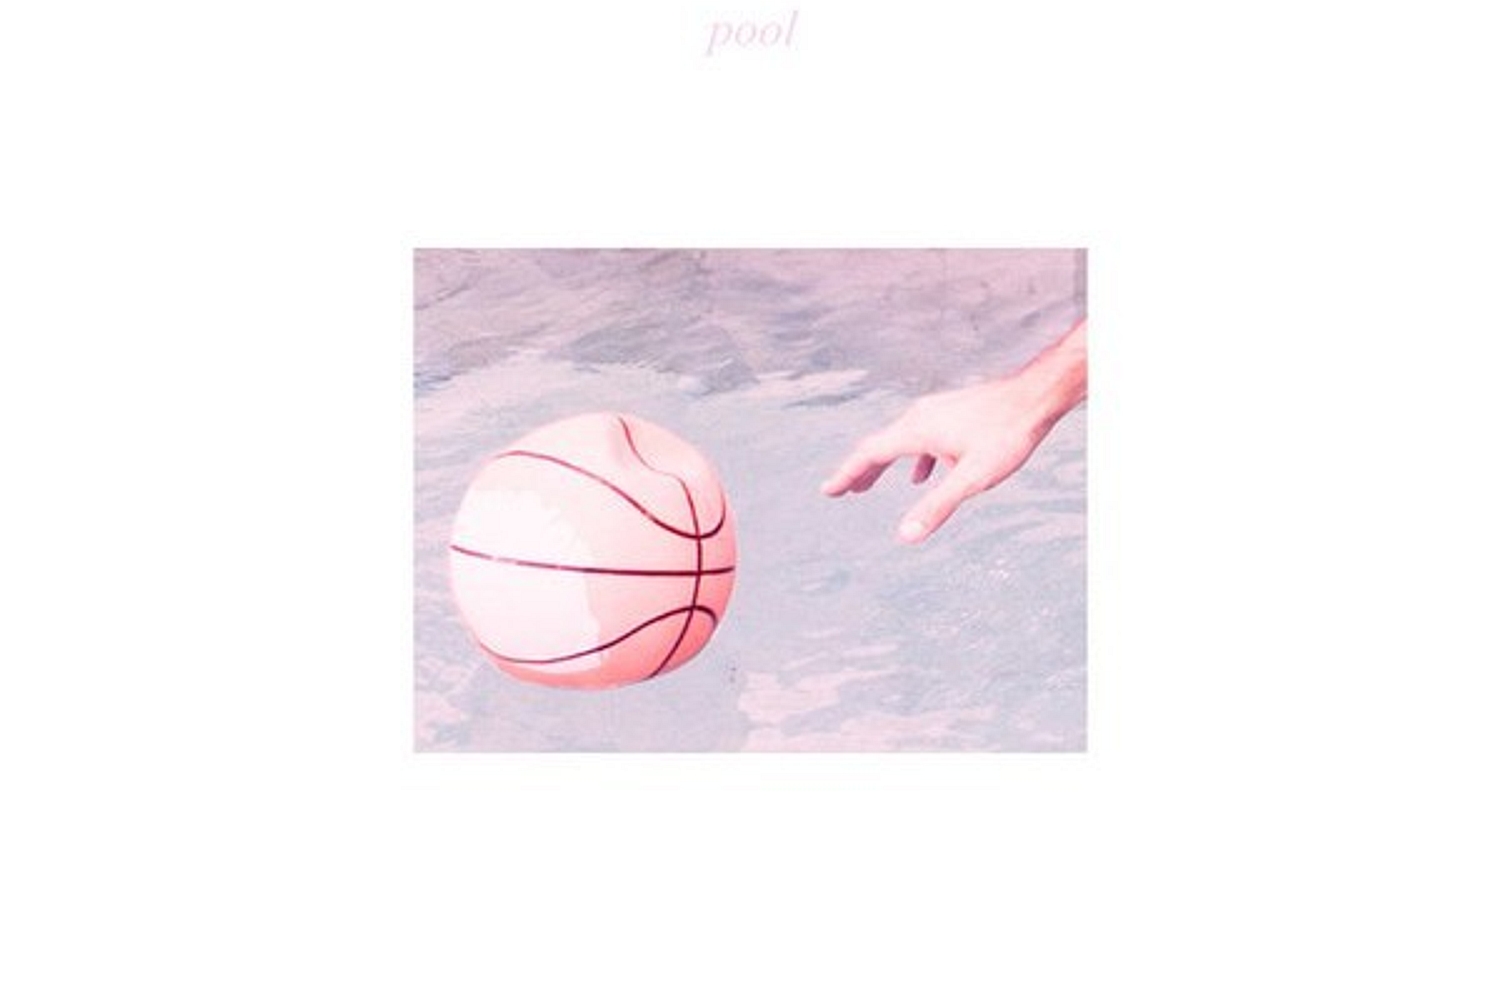 Porches - Pool